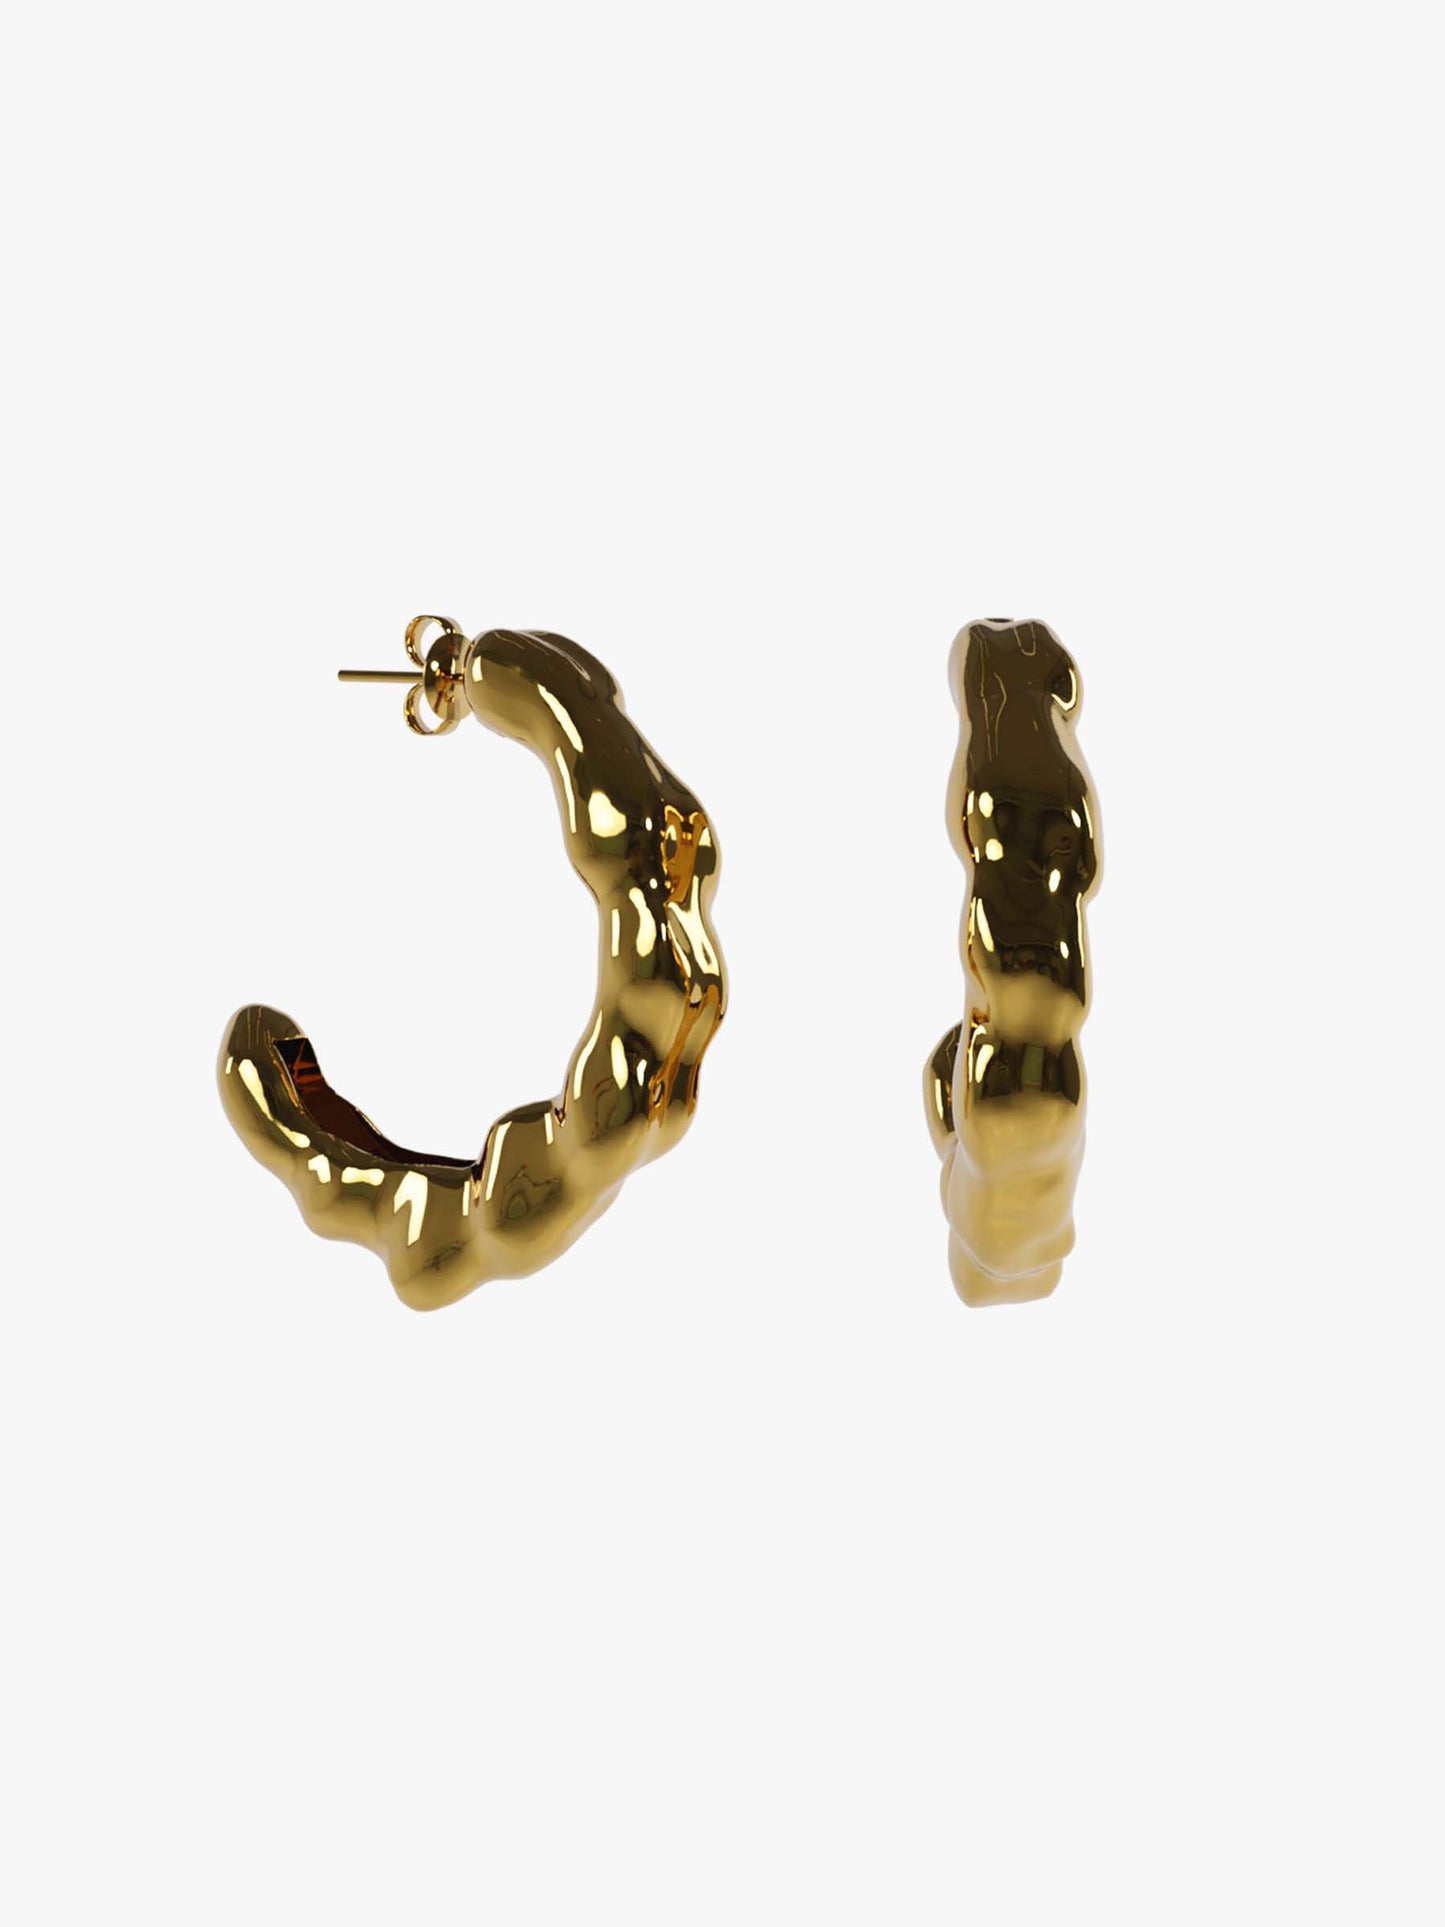 Uzai gold earring (pair)